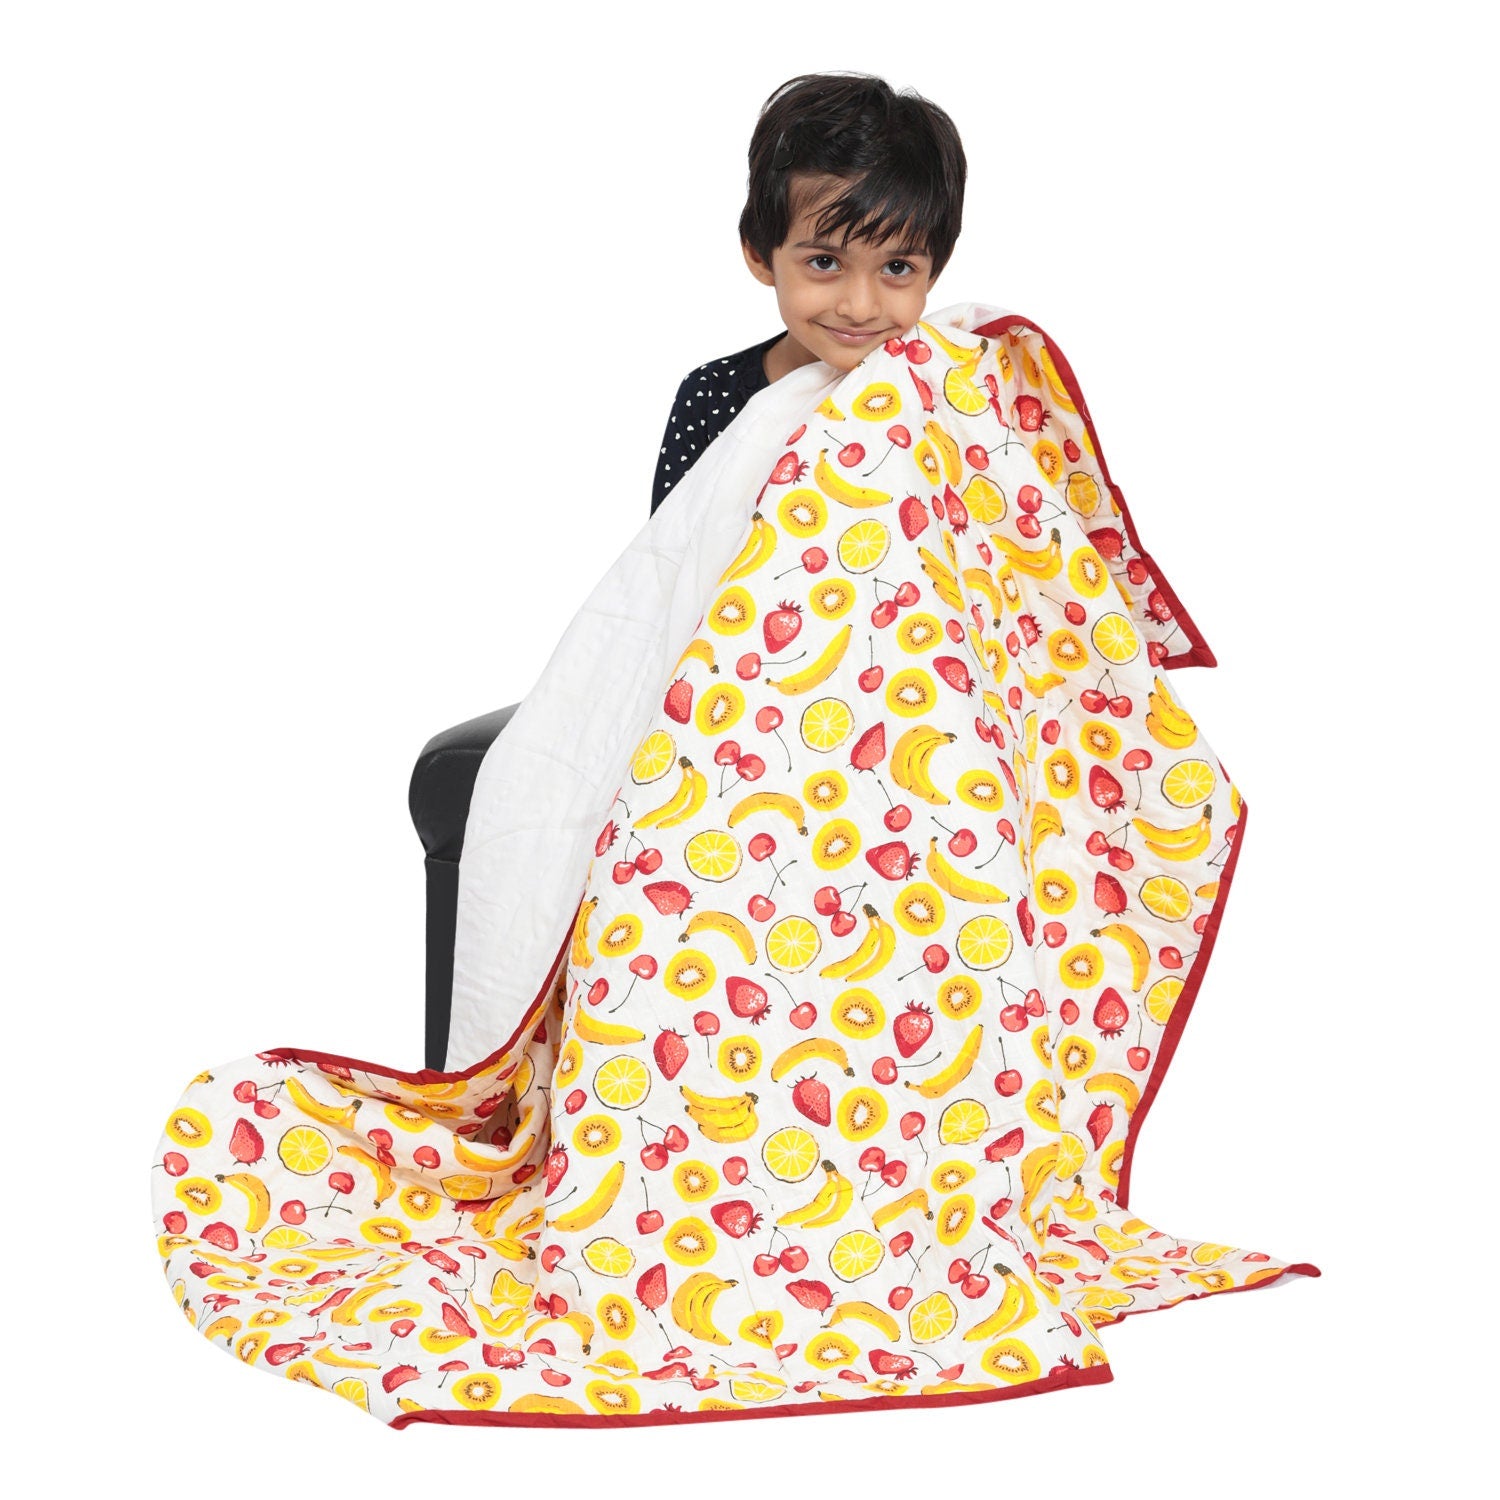 Kids Quilt/Blanket - Organic Cotton - Baby, Infants, Toddlers, Preschoolers, Children - Soft Warm Handmade - Fruits - Yellow